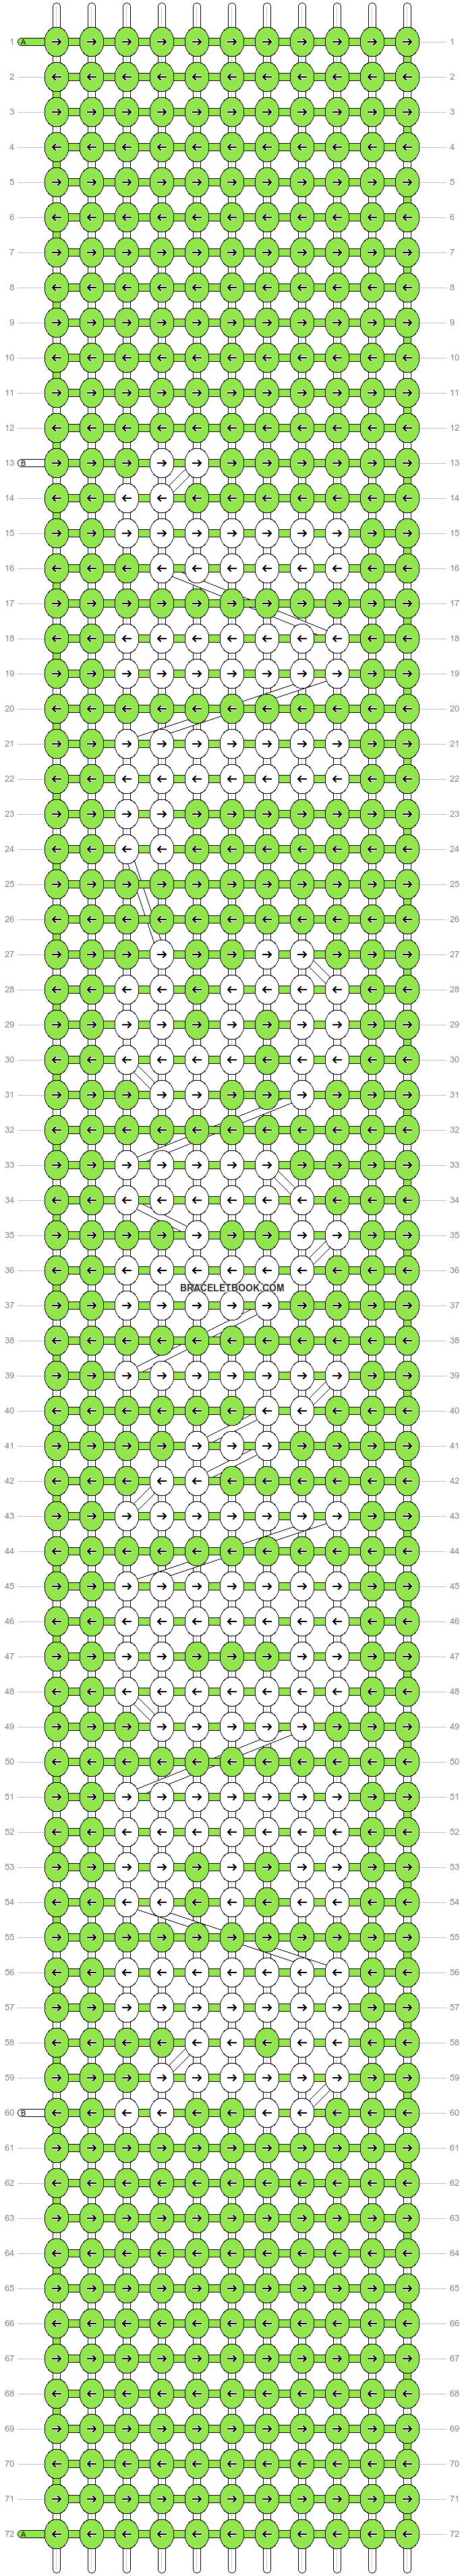 Alpha pattern #60467 variation #107886 pattern